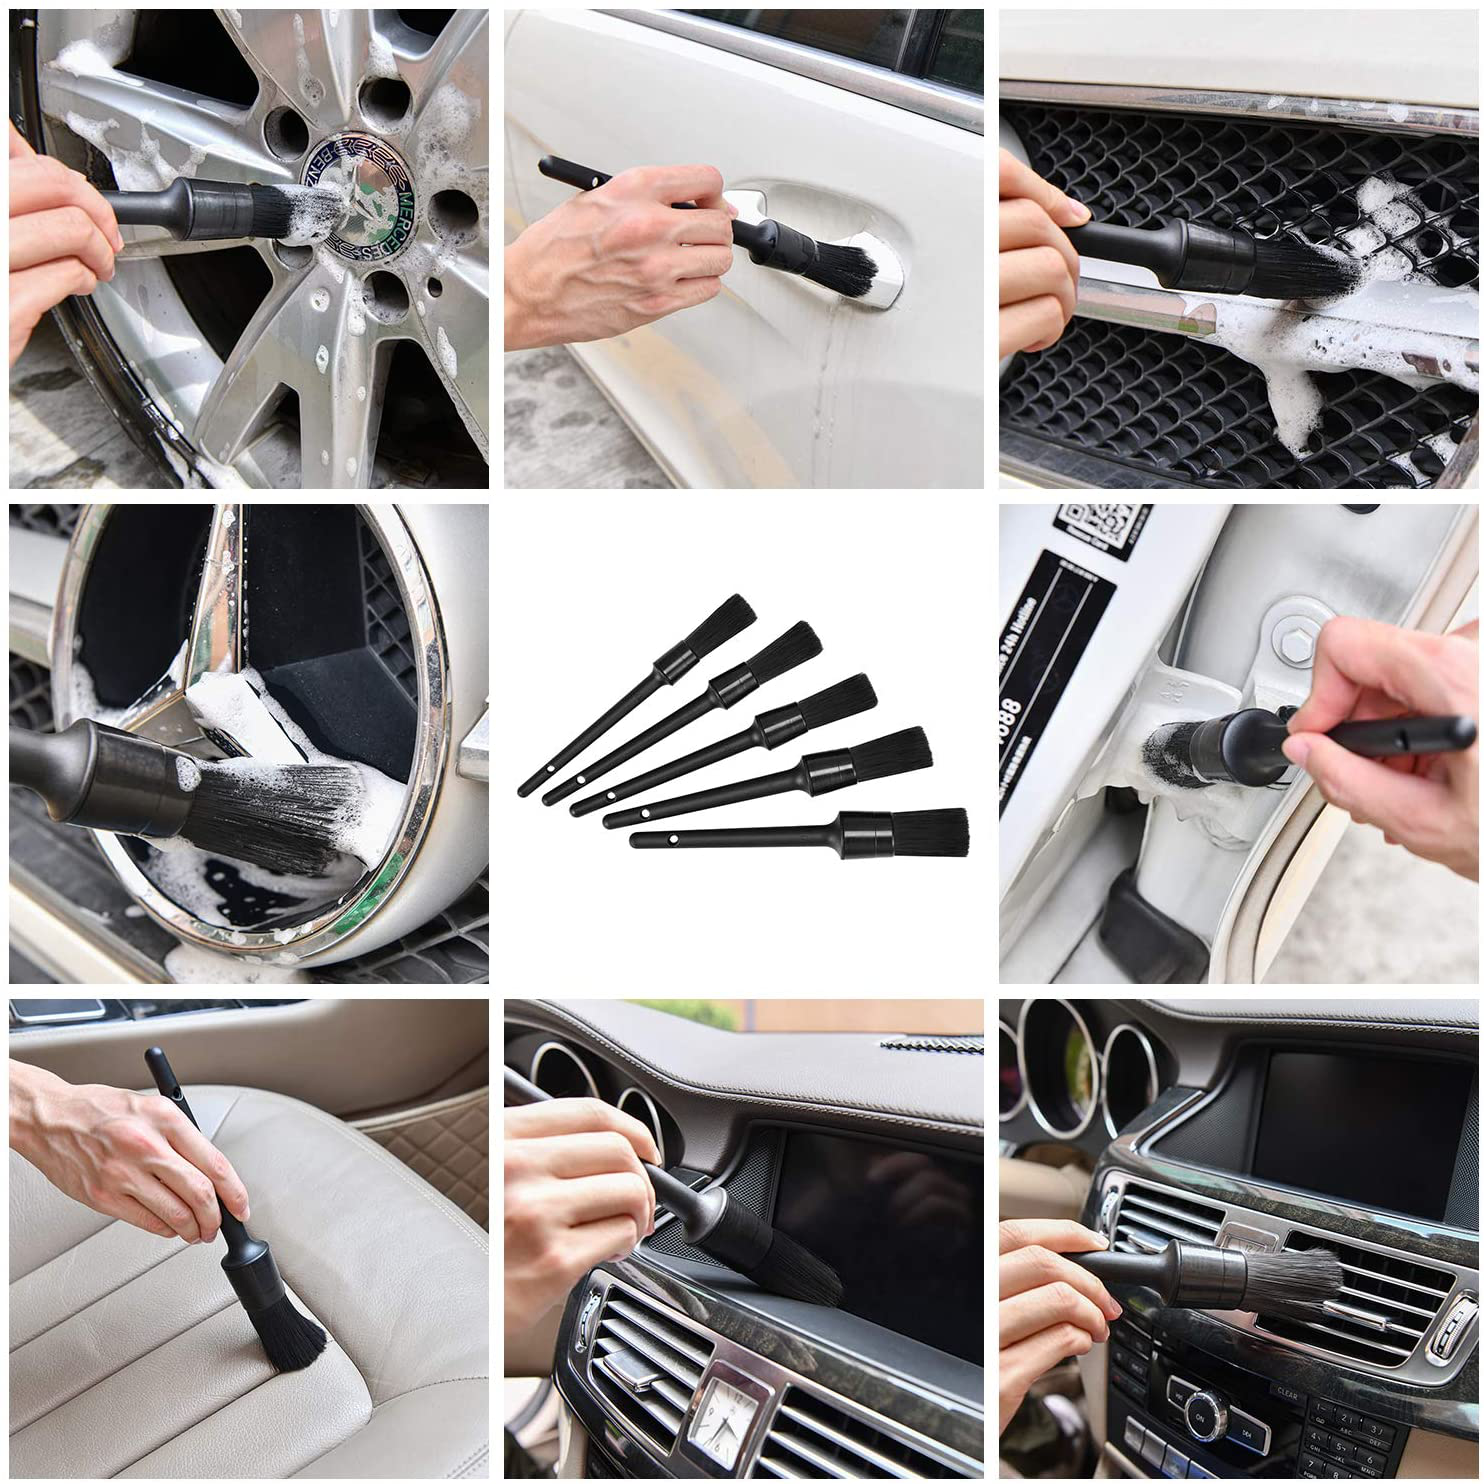 Kohree 9Pcs Wheel Tire Brush Set for Cleaning Wheels, Detail Car Wash Wheel Cleaner Rim Brushes Kit for Washing Tires Vehicle Auto Engine